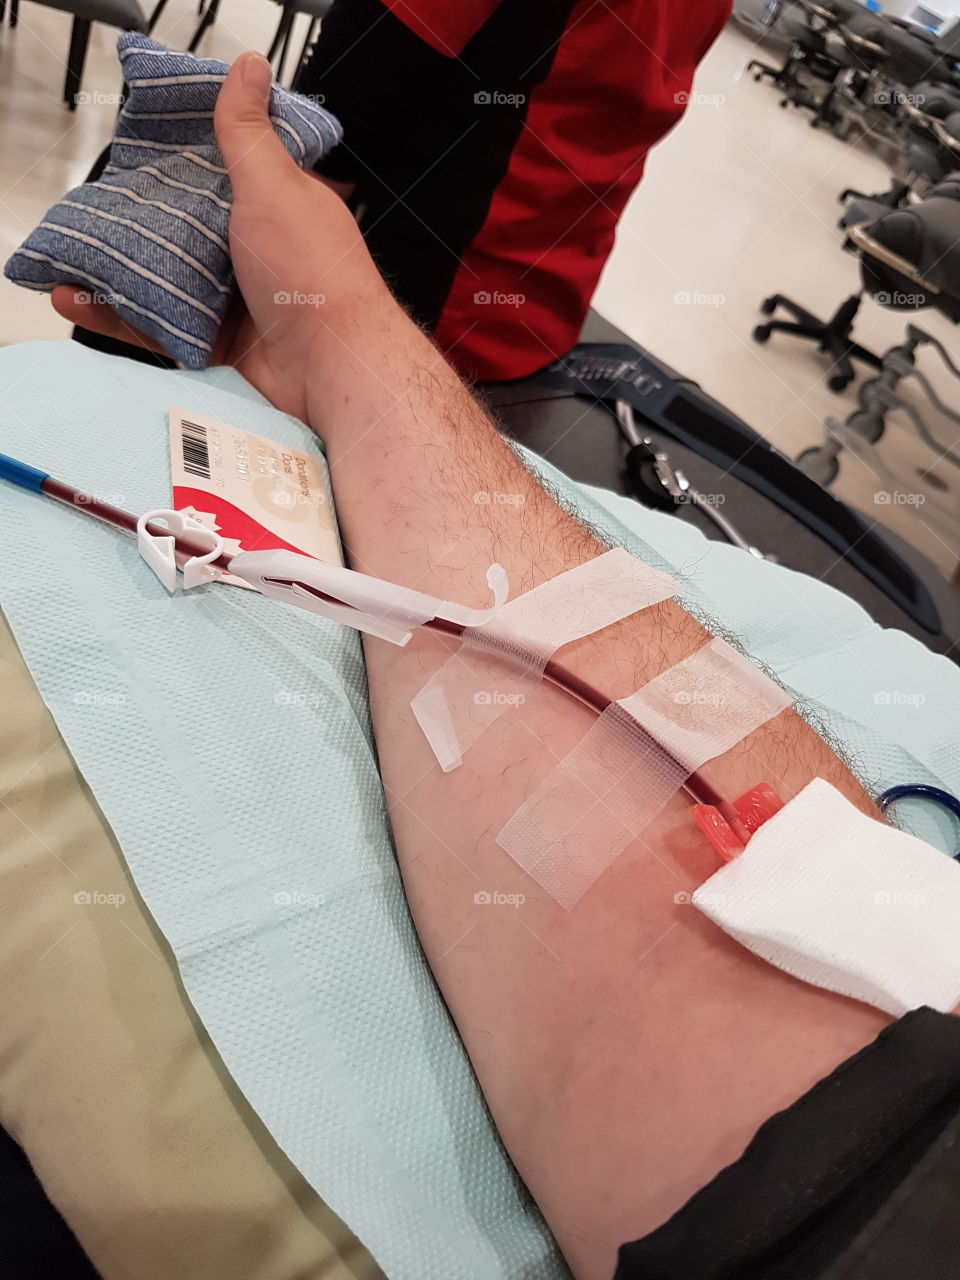 platelet donation